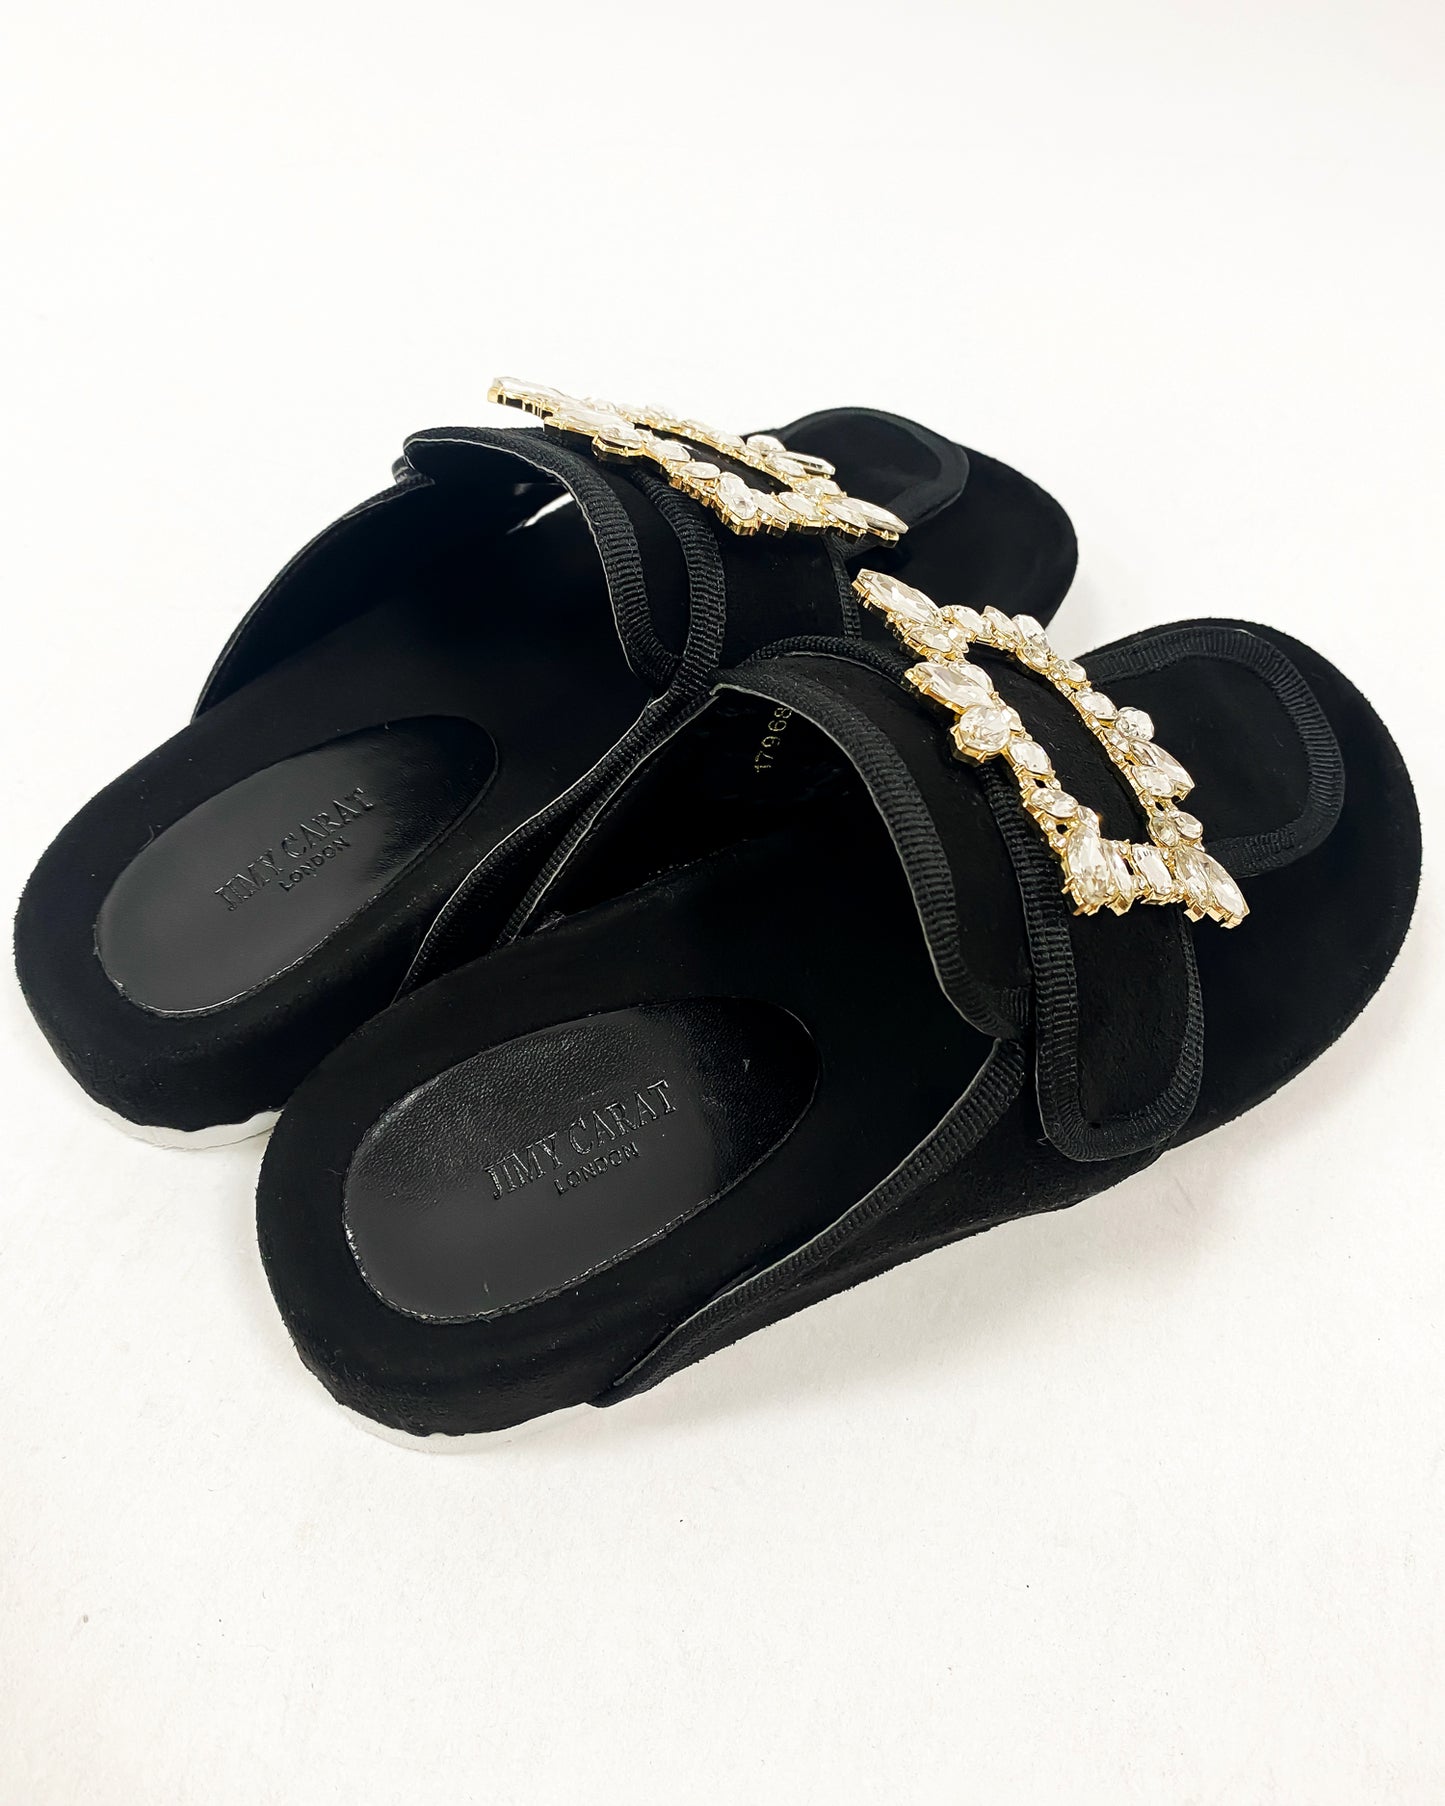 black suede diamonds sandals *pre-order*